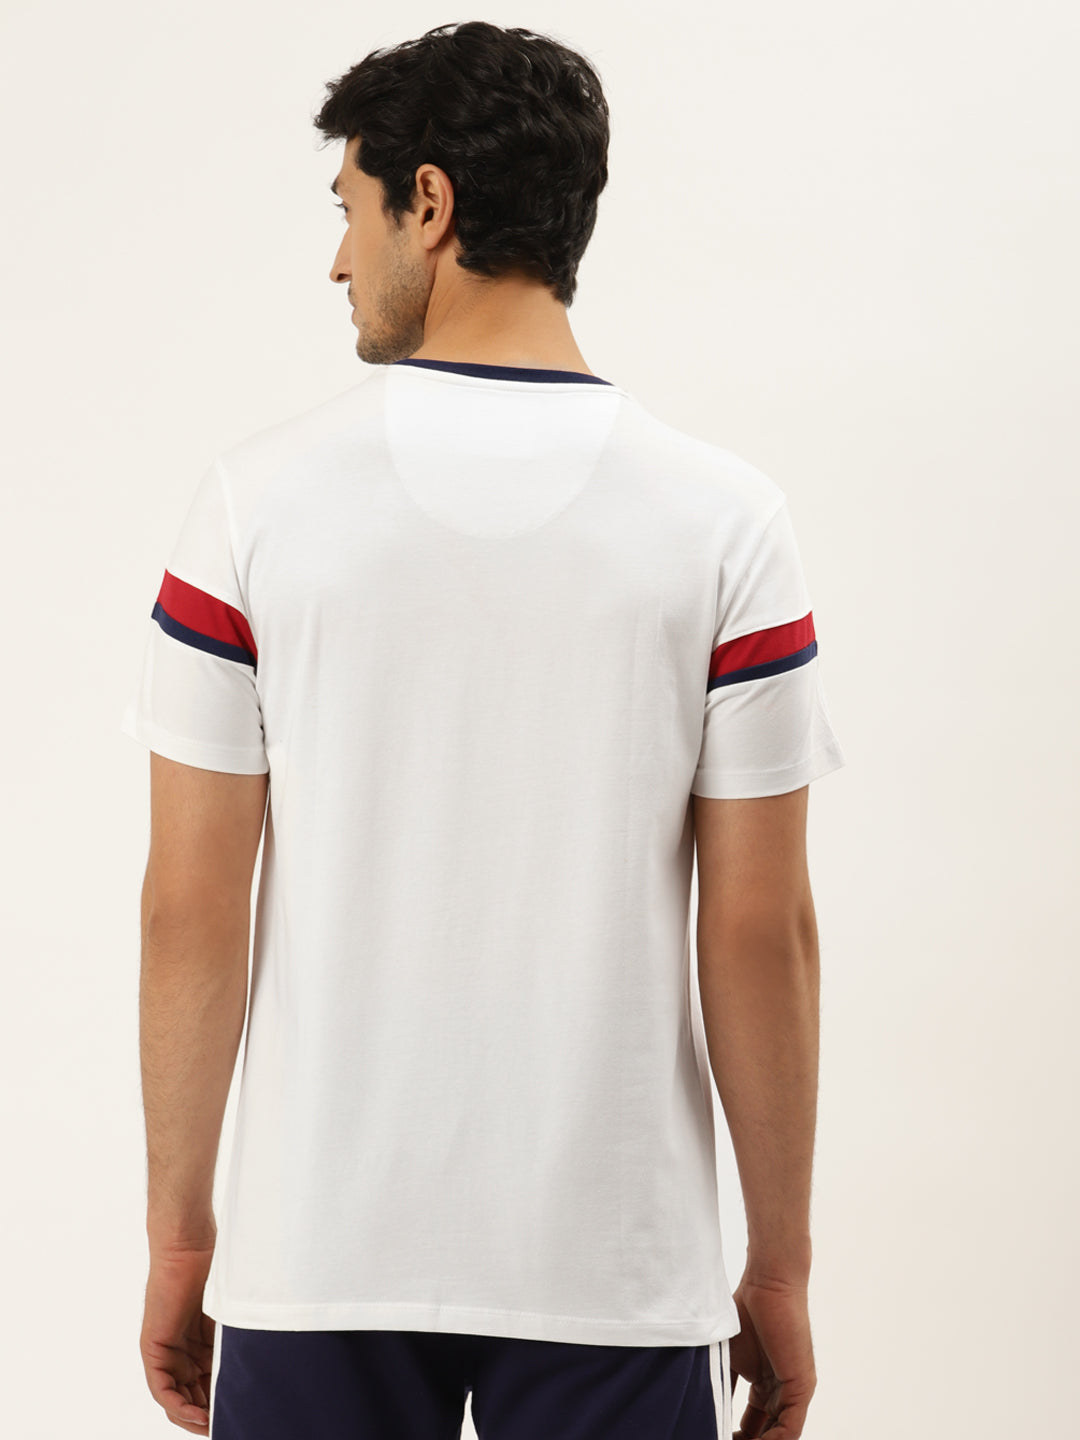 Men's Premium Cotton Lycra Smart Fit Printed Half Sleeve Crew Neck Tshirts